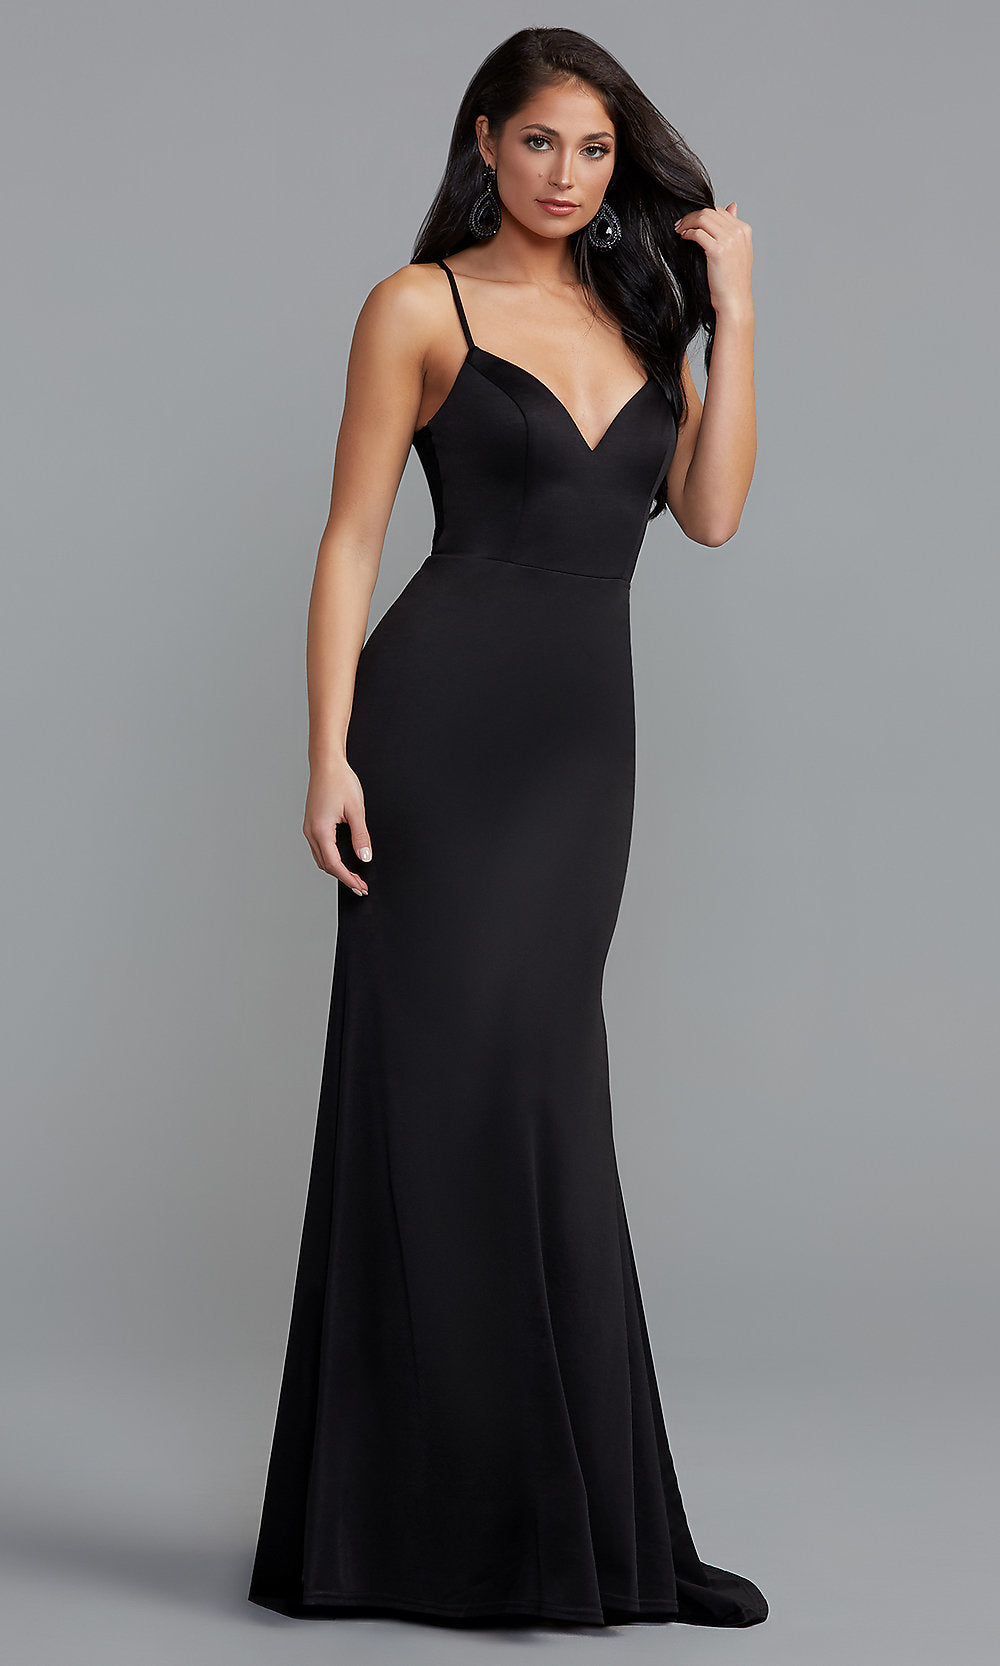 Lace-Back Long Black Formal Prom Dress